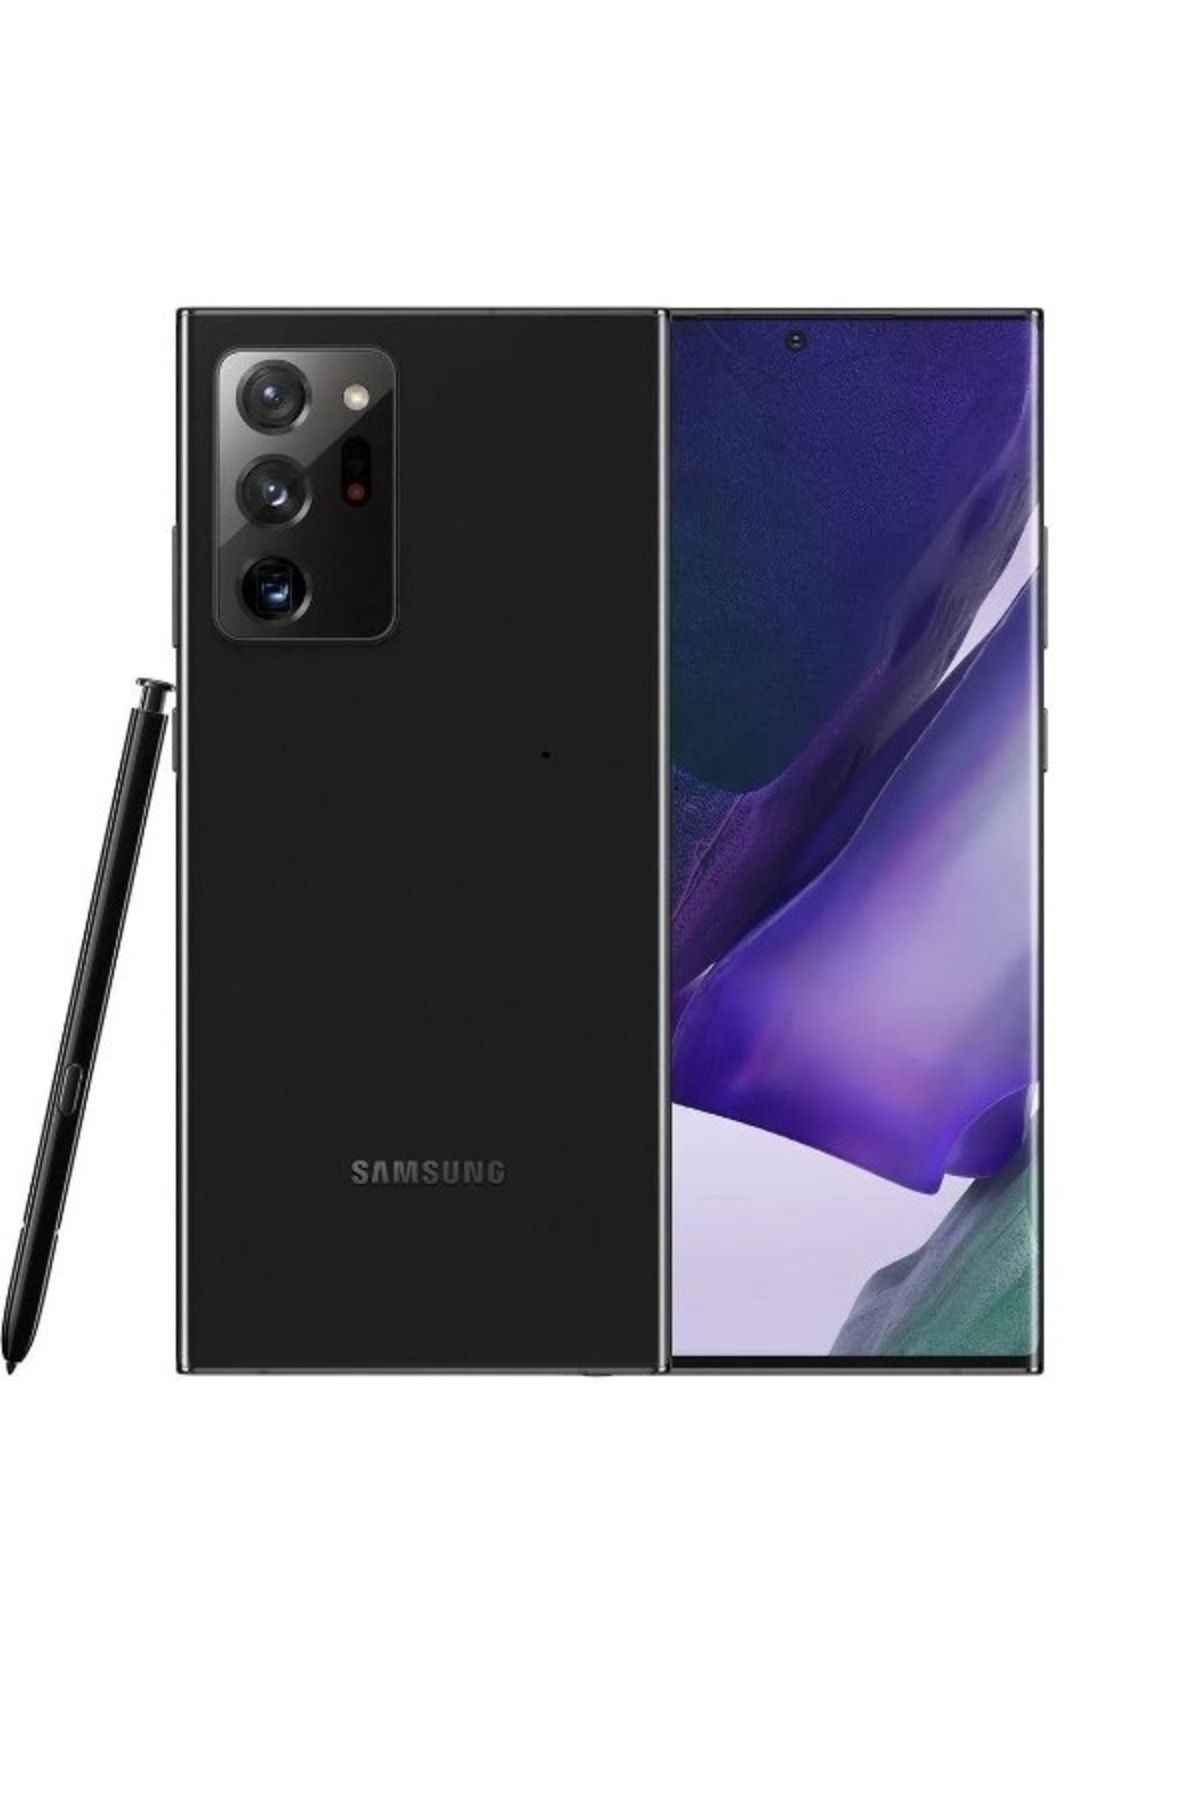 Samsung Yenilenmiş Galaxy Note 20 Ultra 5g 256 GB Siyah Cep Telefonu (12 Ay Garantili) - C Kalite